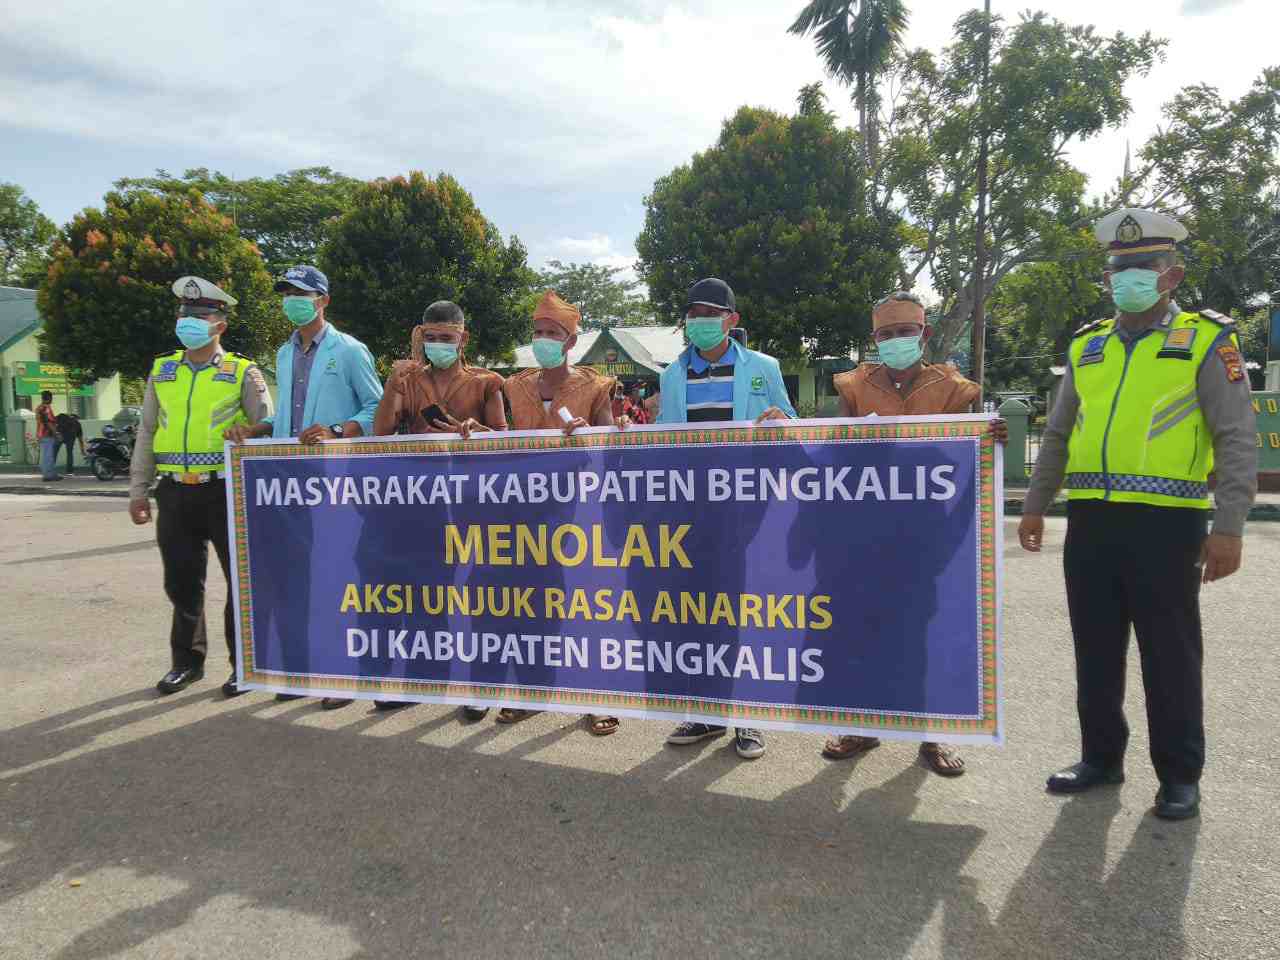 Deklarasi Menolak Aksi Unjuk Rasa Anarkis Dihadiri Anggota Polres Bengkalis